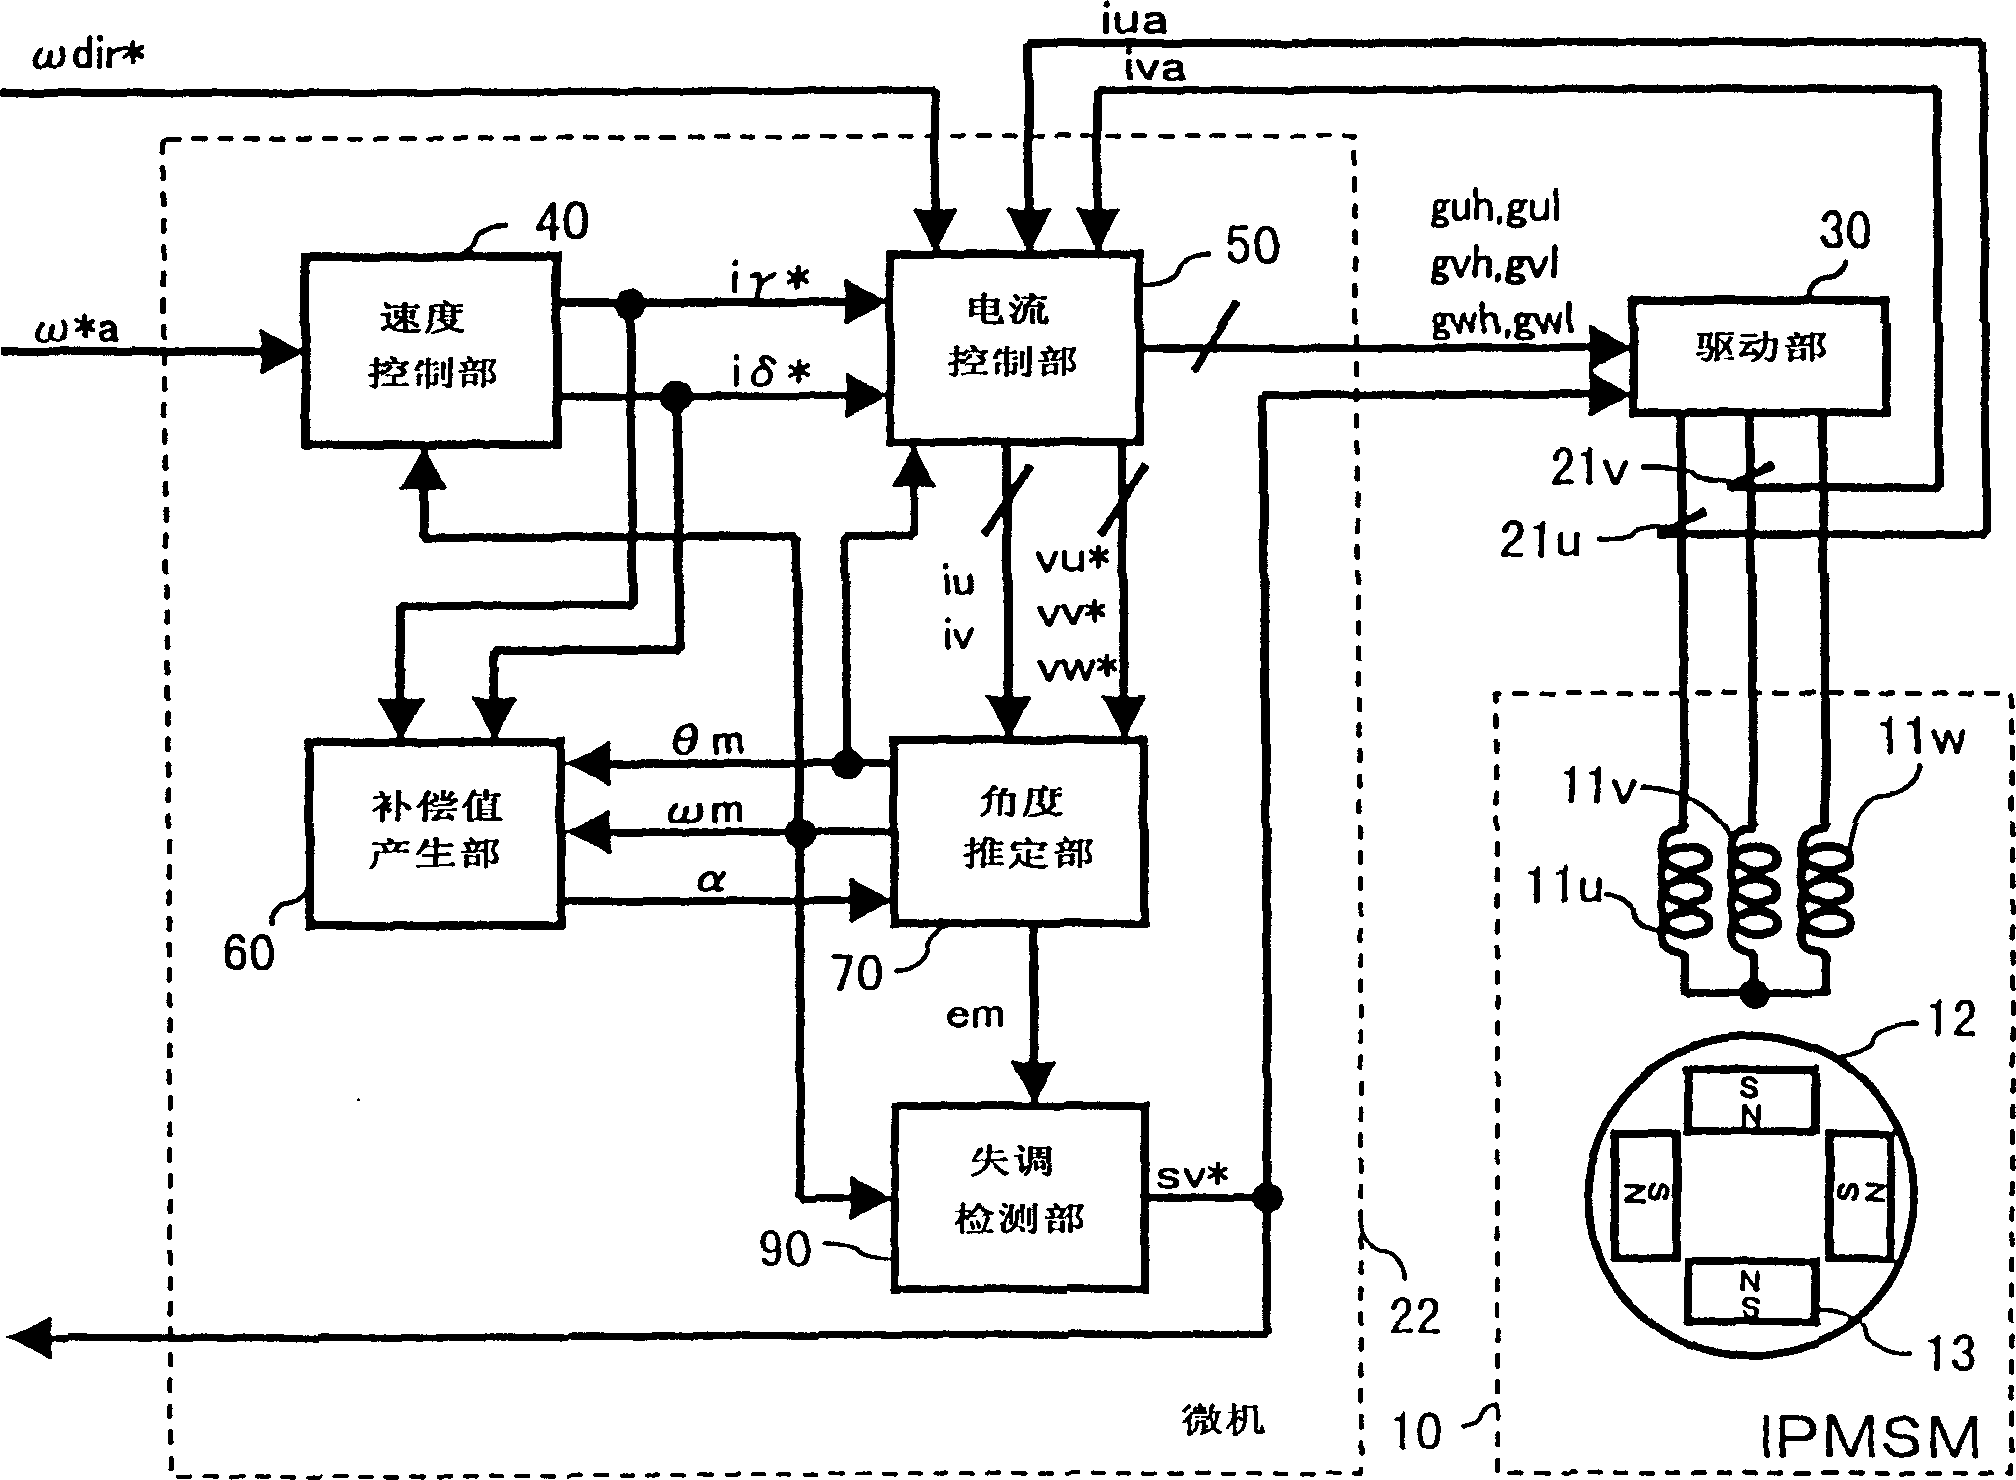 No-position sensor motor control device